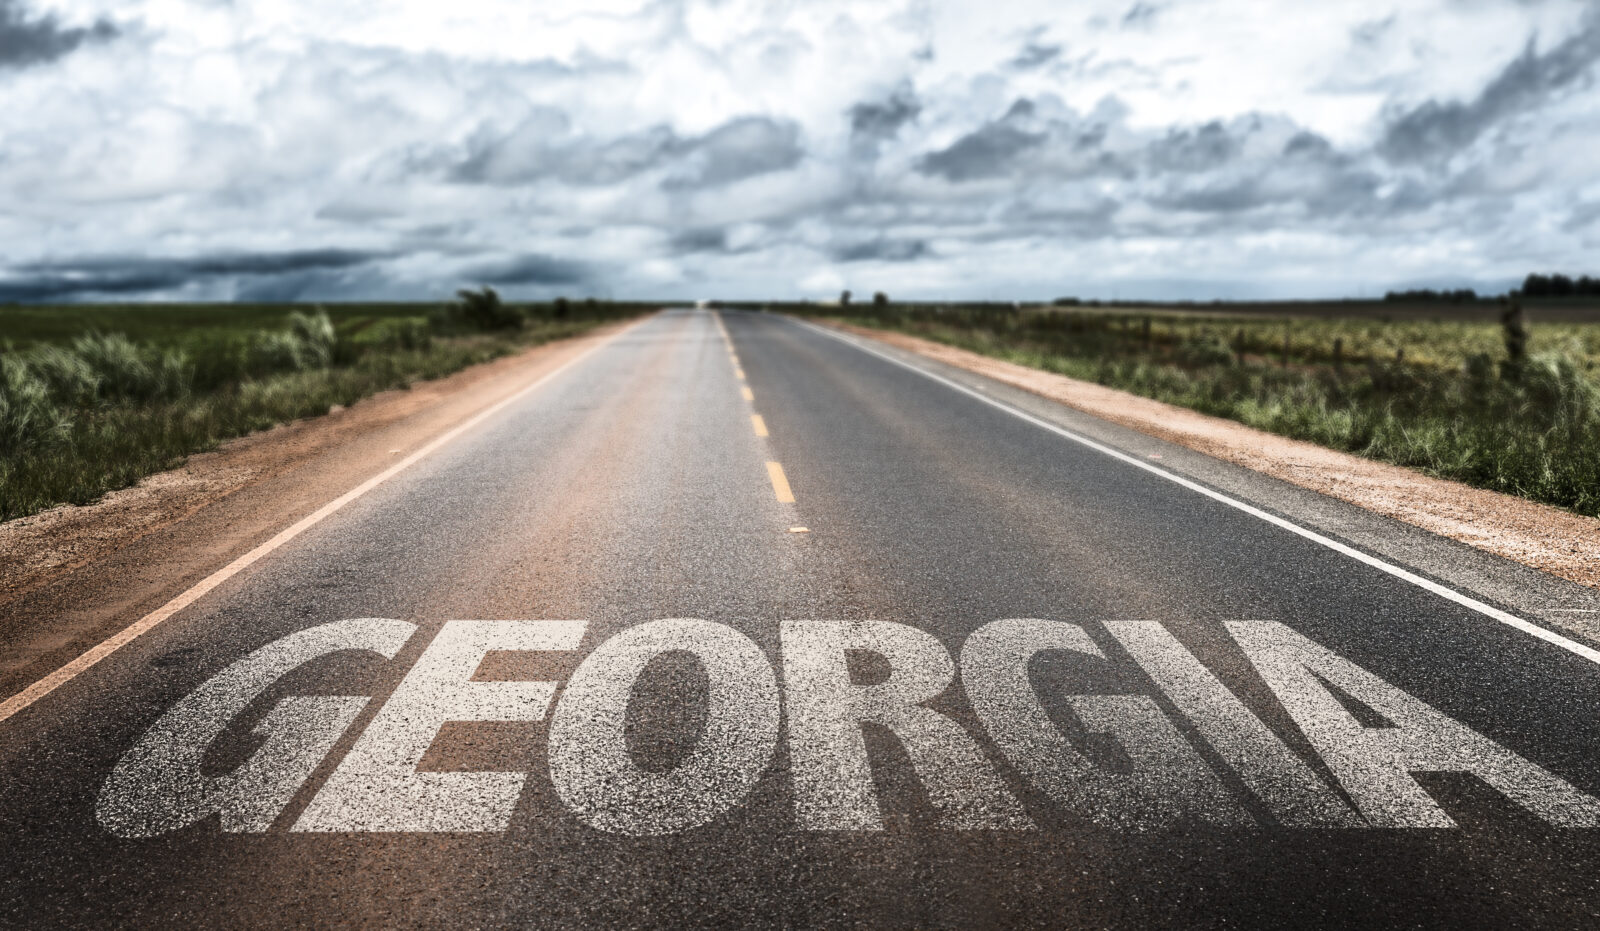 Georgia written on the road